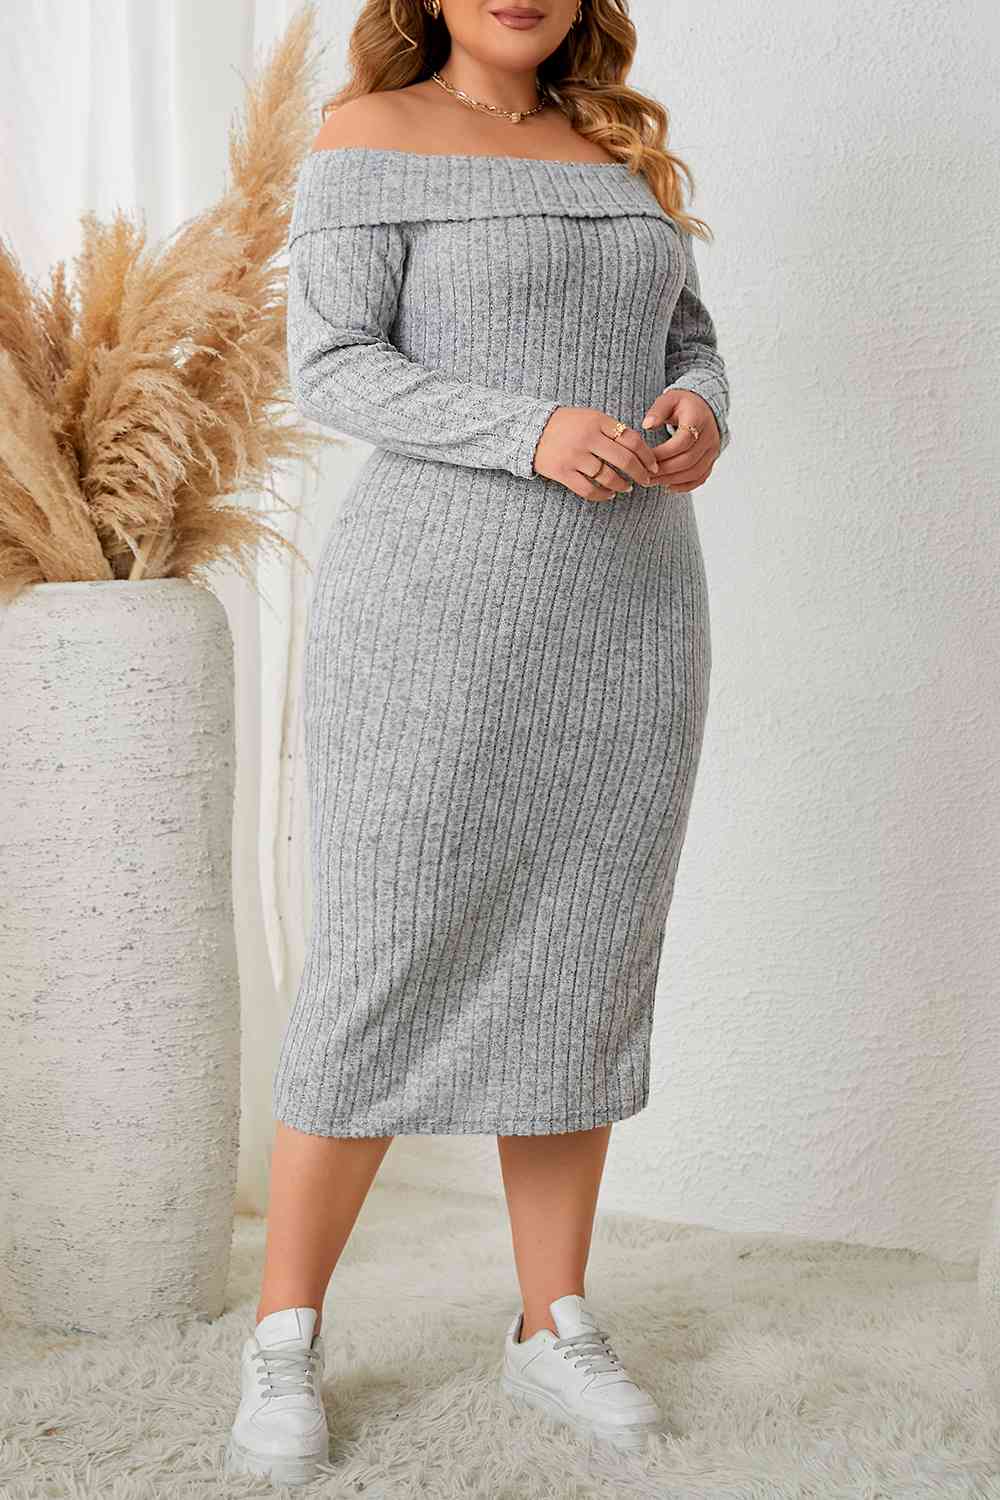 TEEK - Heather Grey Plus Size Long Sleeve Slit Dress DRESS TEEK Trend   